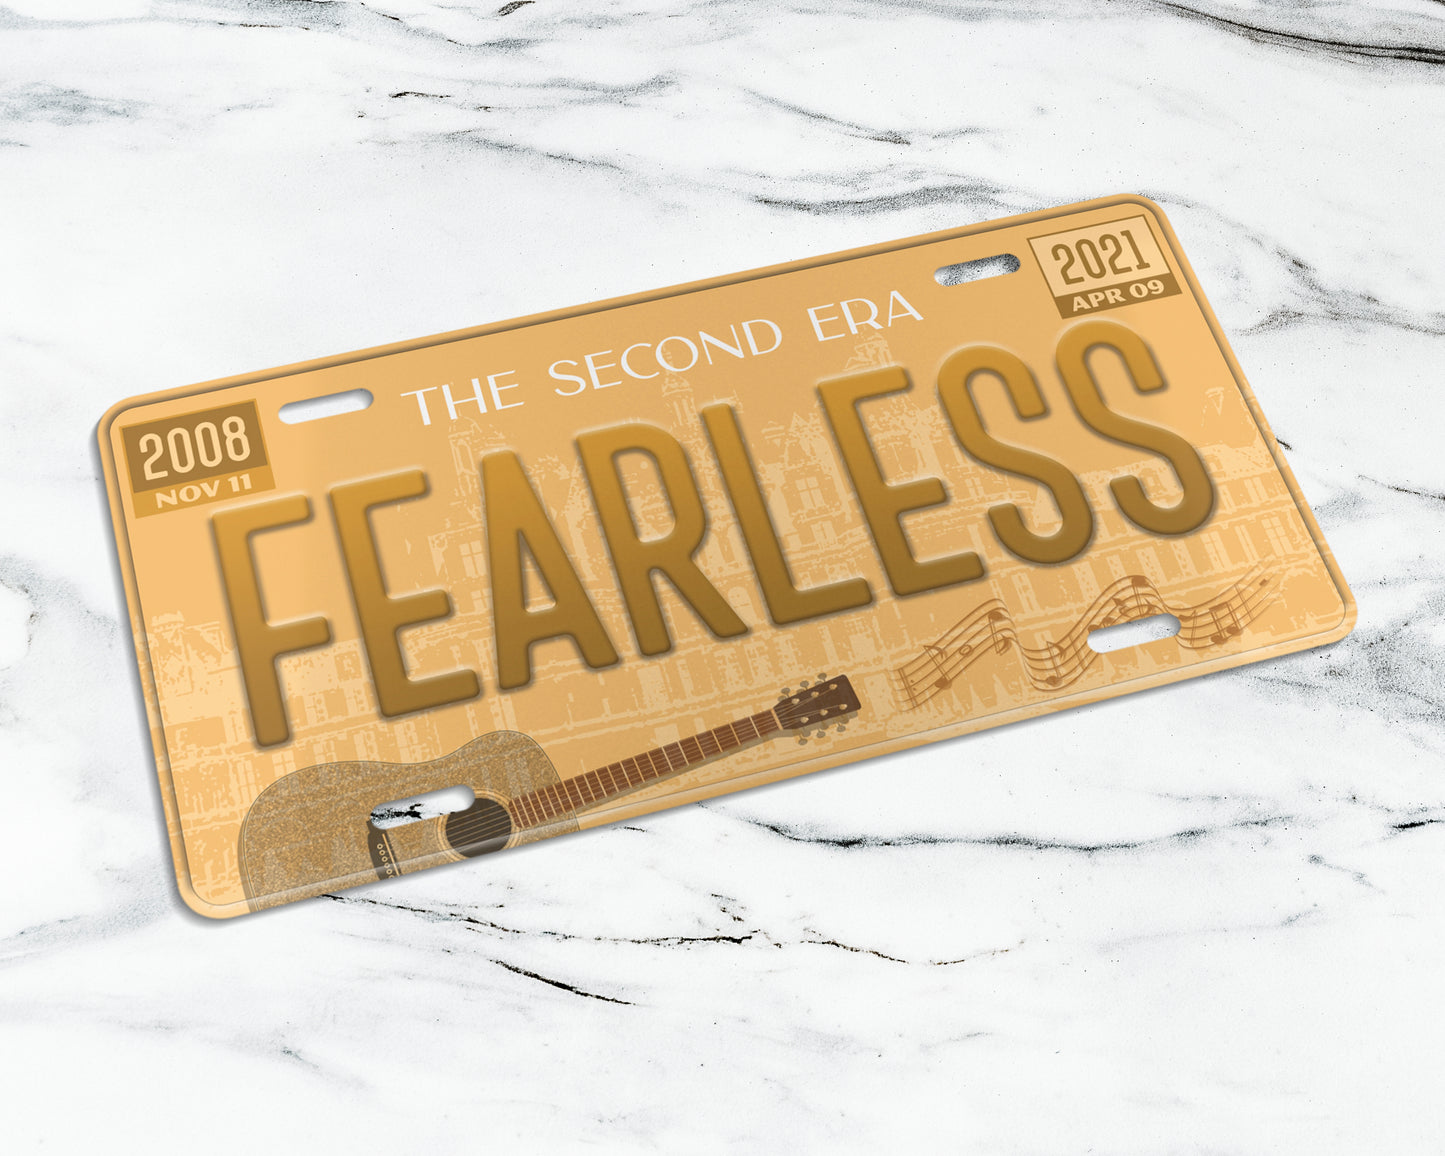 Fearless era license plate